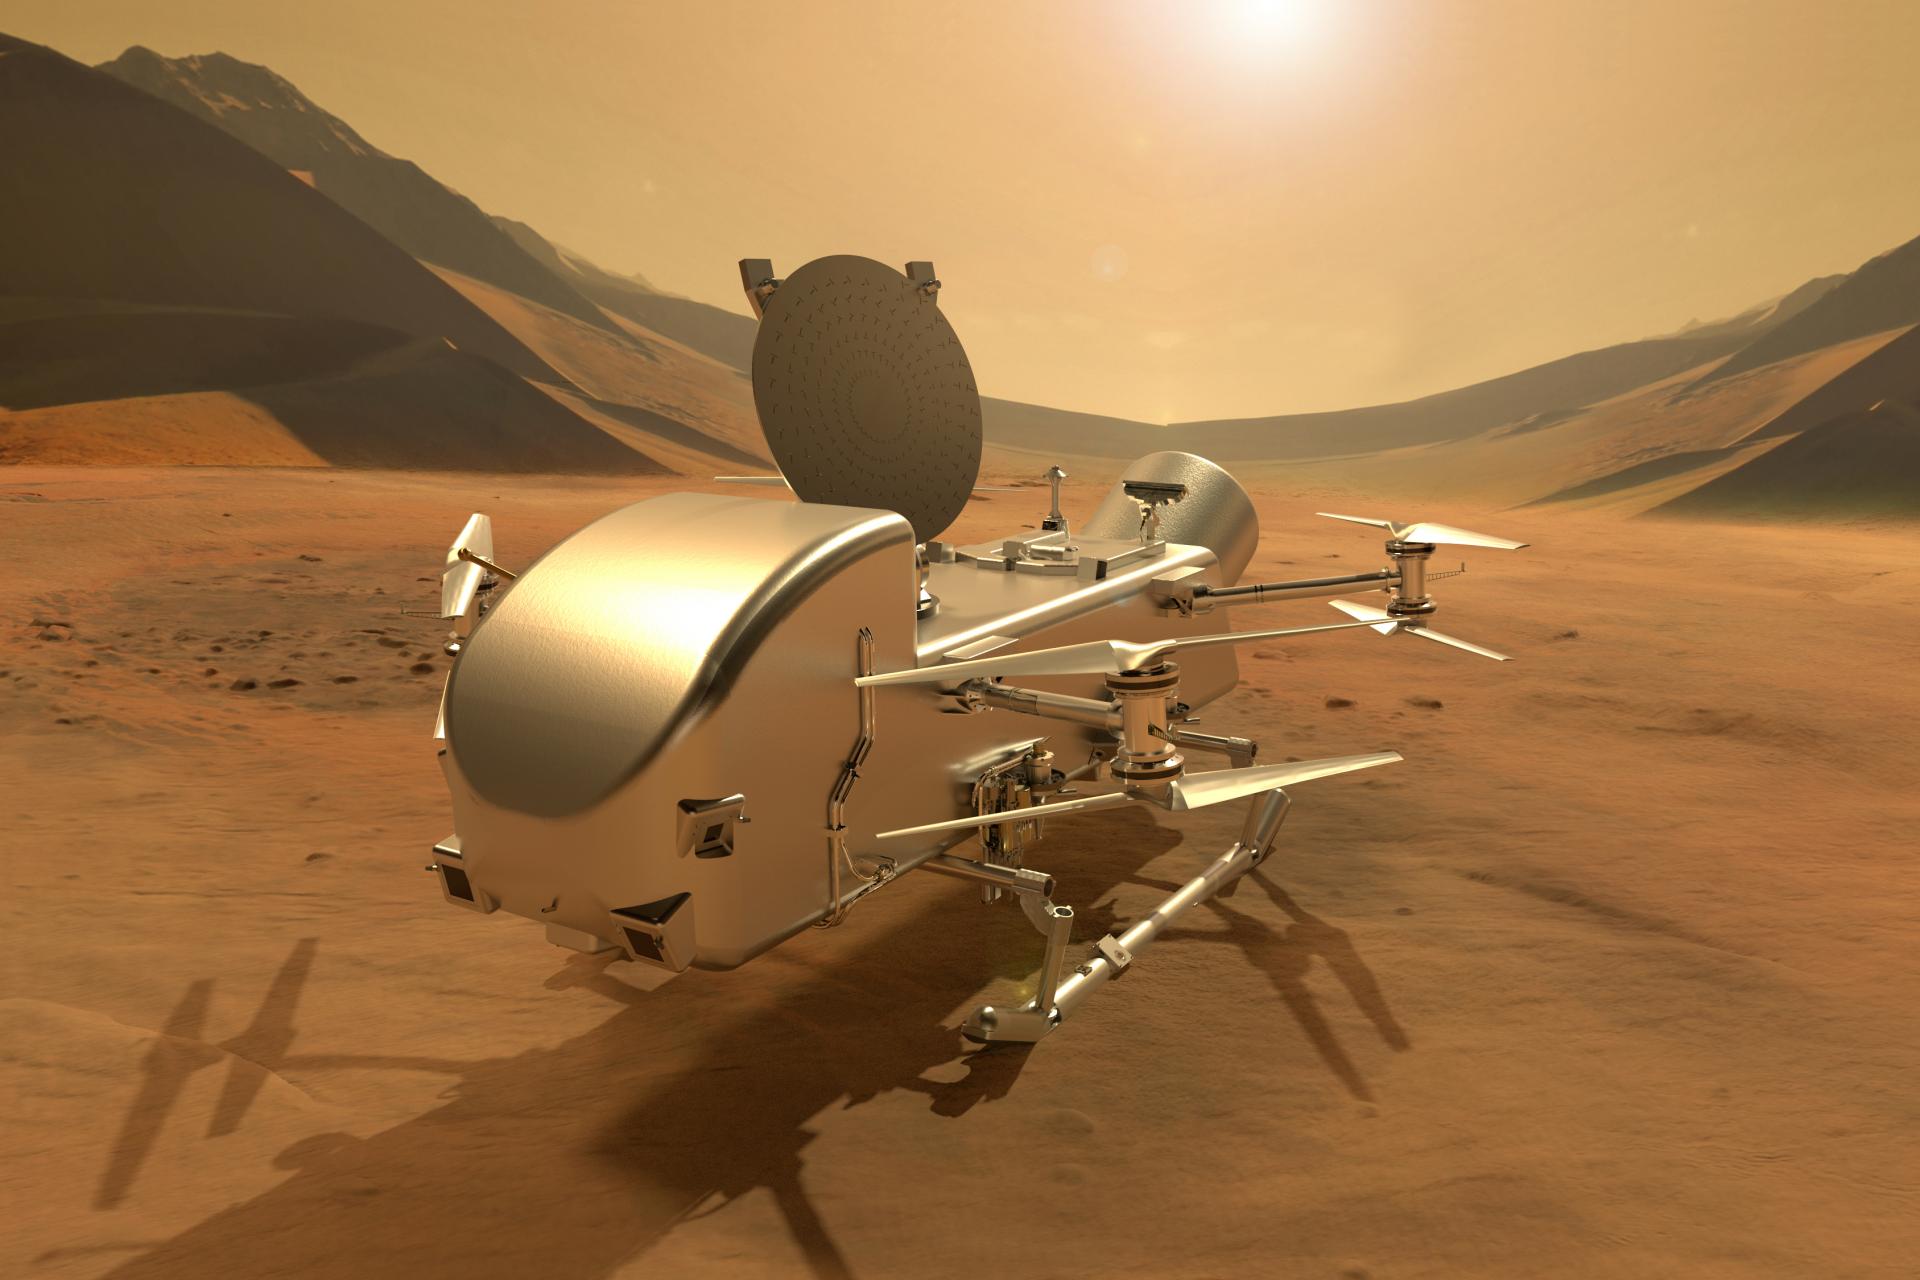 Illustration of Dragonfly landing on Titan